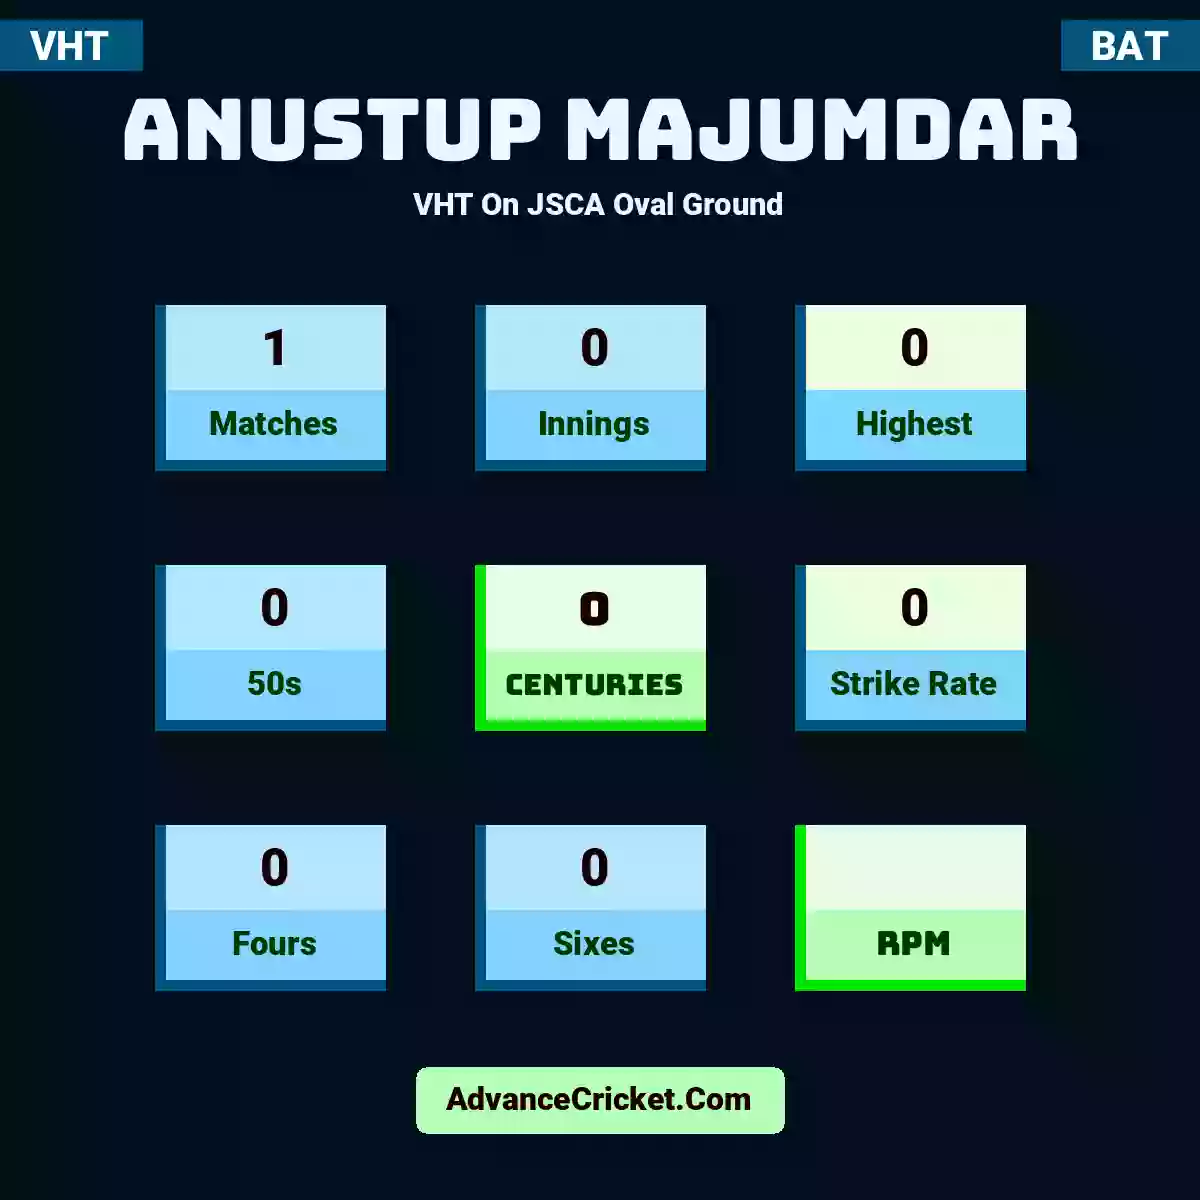 Anustup Majumdar VHT  On JSCA Oval Ground, Anustup Majumdar played 1 matches, scored 0 runs as highest, 0 half-centuries, and 0 centuries, with a strike rate of 0. A.Majumdar hit 0 fours and 0 sixes.